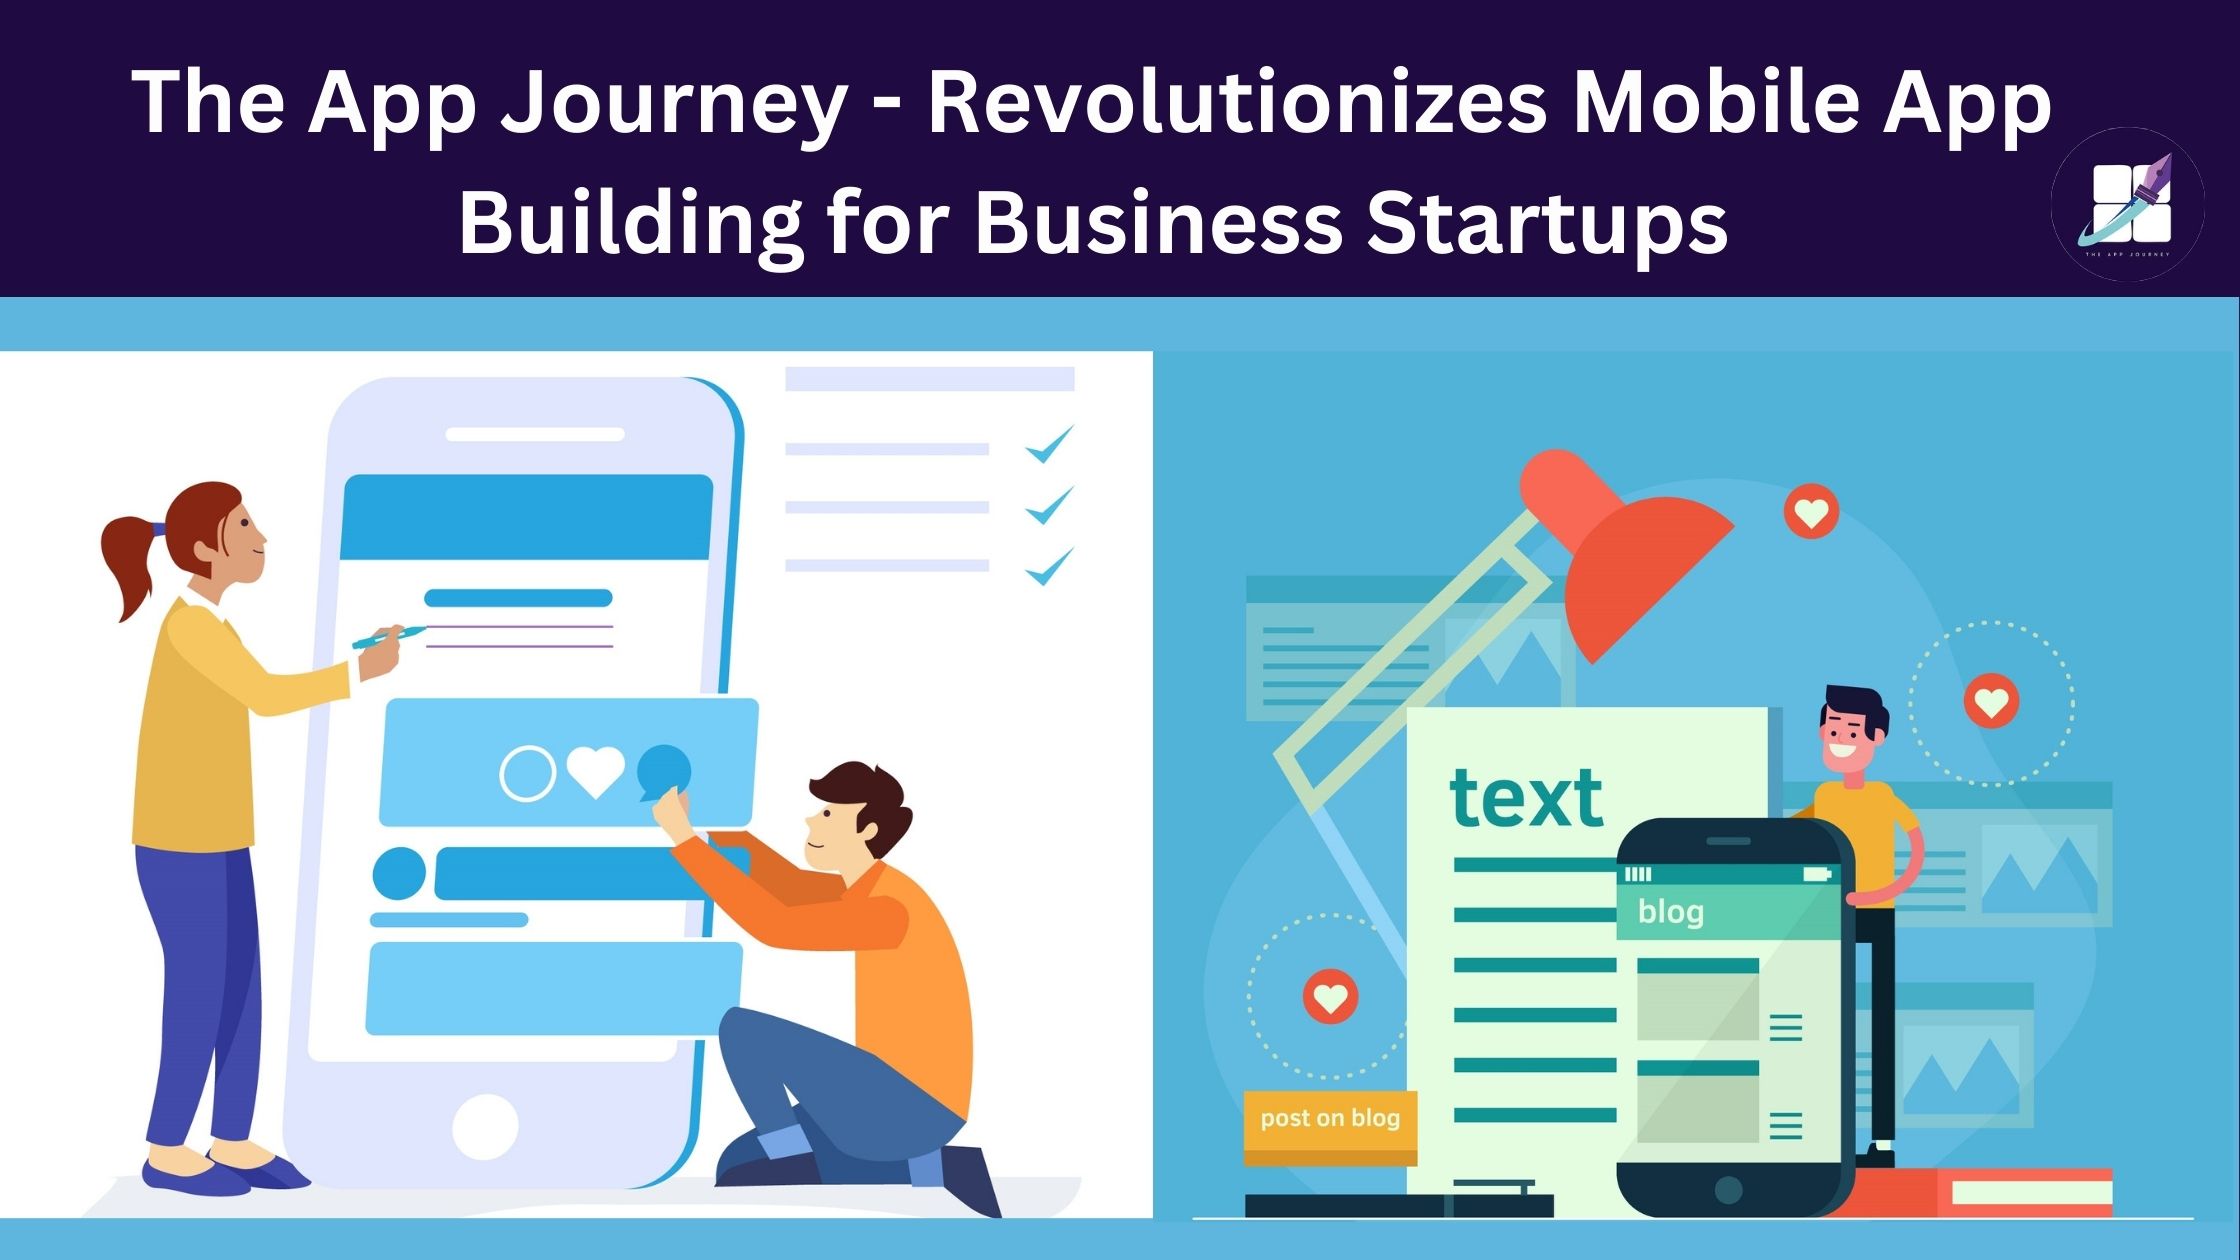 How The App Journey Revolutionizes Mobile App Building for Business Startups